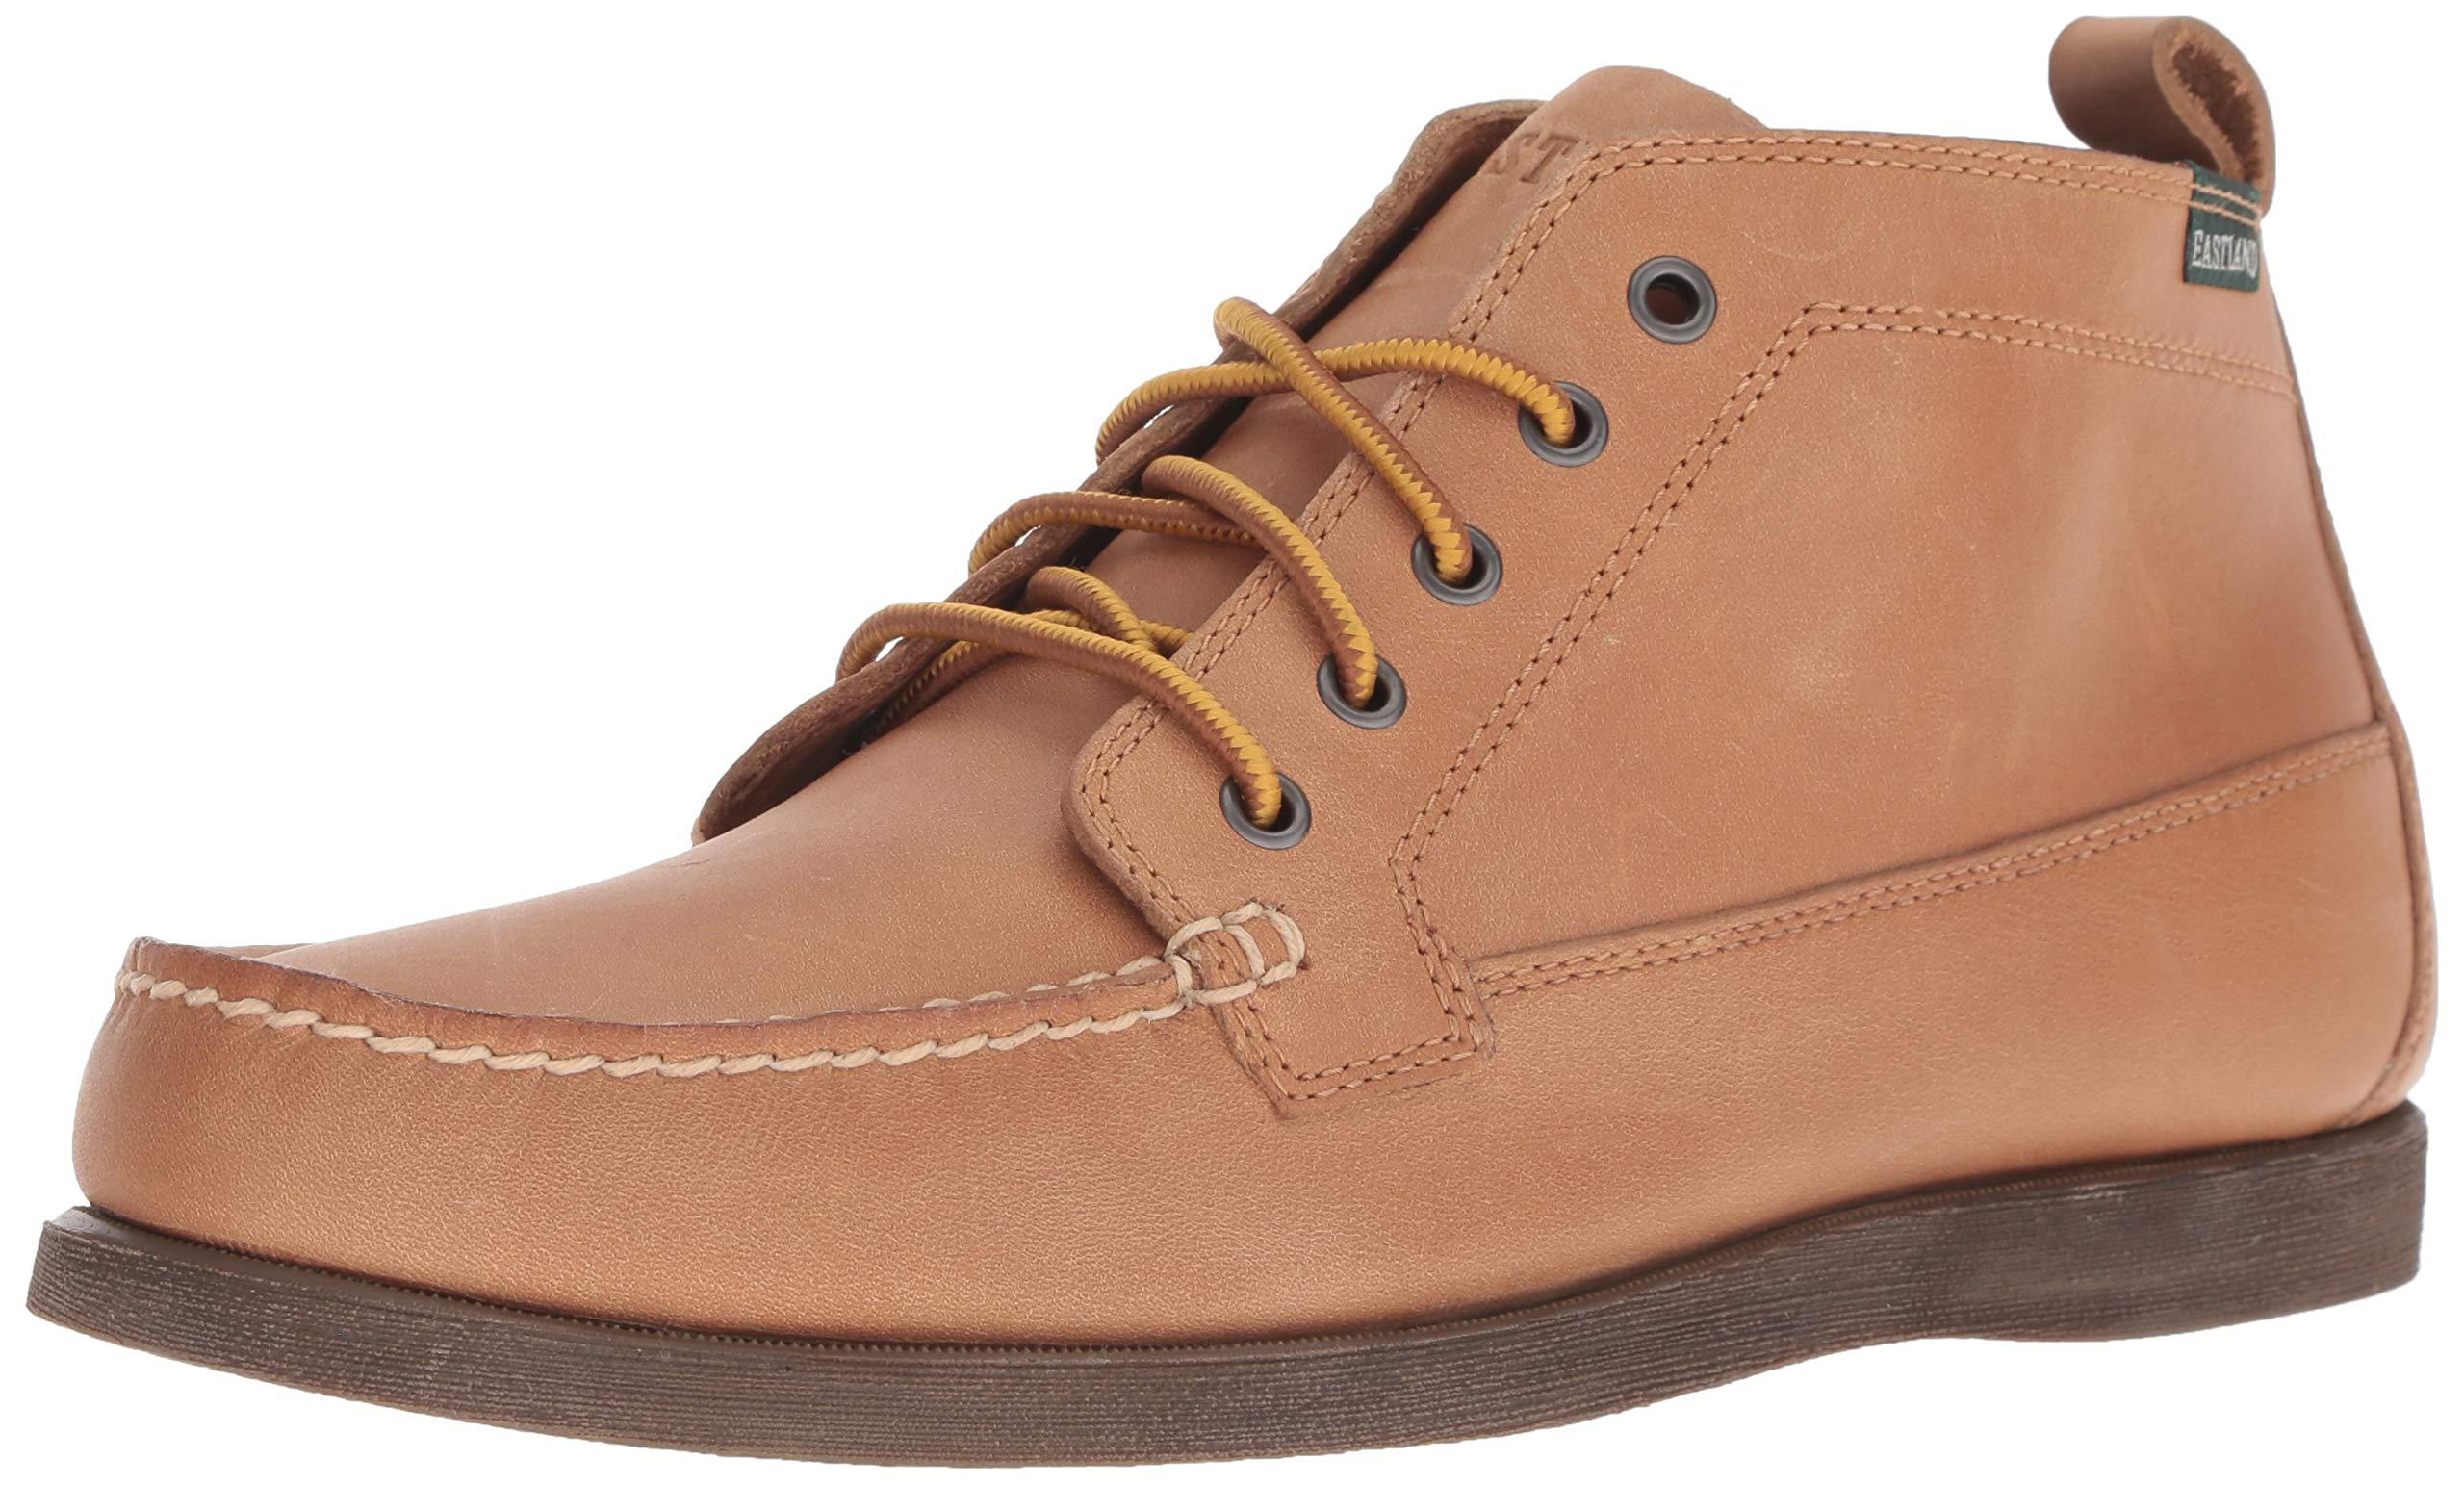 Eastland Leather Seneca Chukka Boot in Tan (Brown) for Men - Save 34% ...